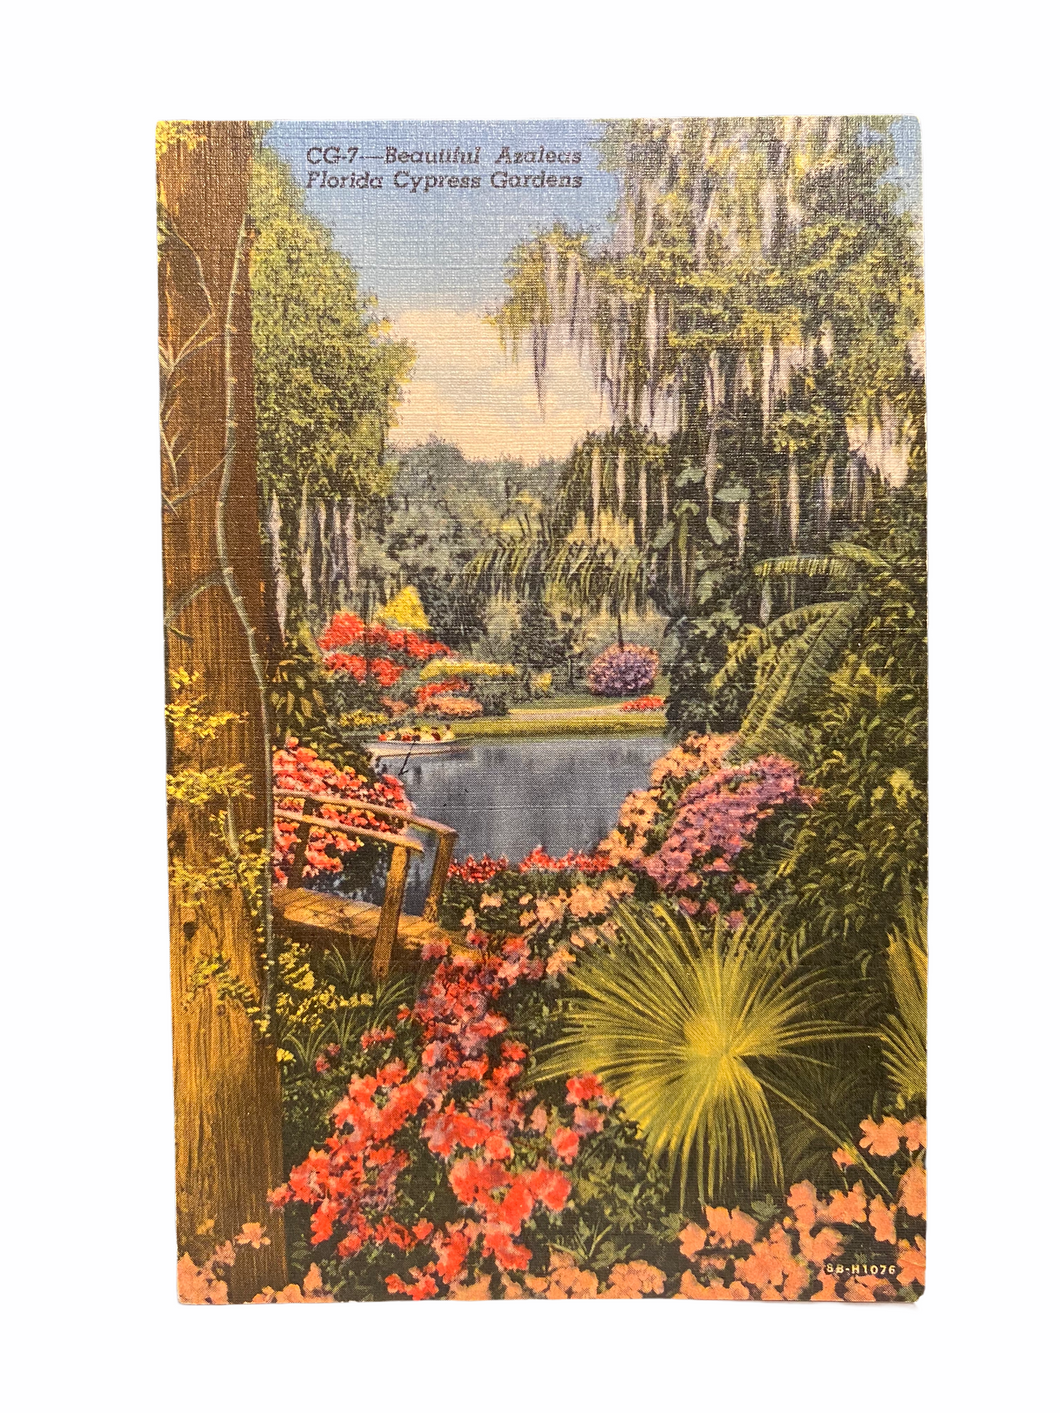 Beautiful Azaleas Florida Cypress Gardens. Unused Linen Postcard Circa 1930-1944